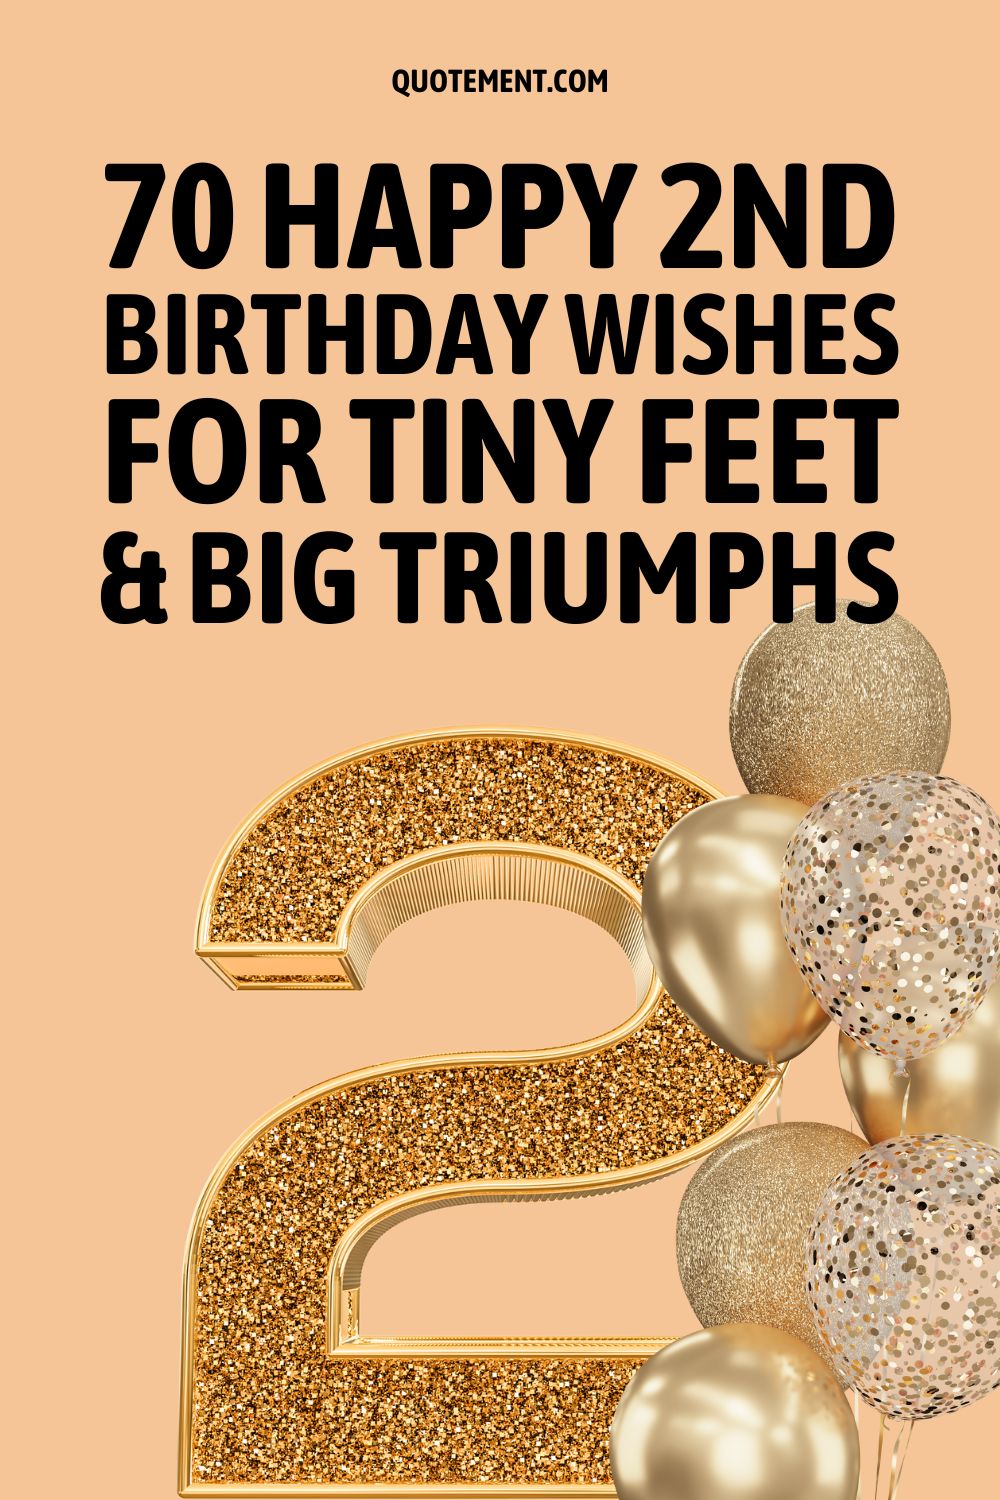 70 Happy 2nd Birthday Wishes For Tiny Feet & Big Triumphs
